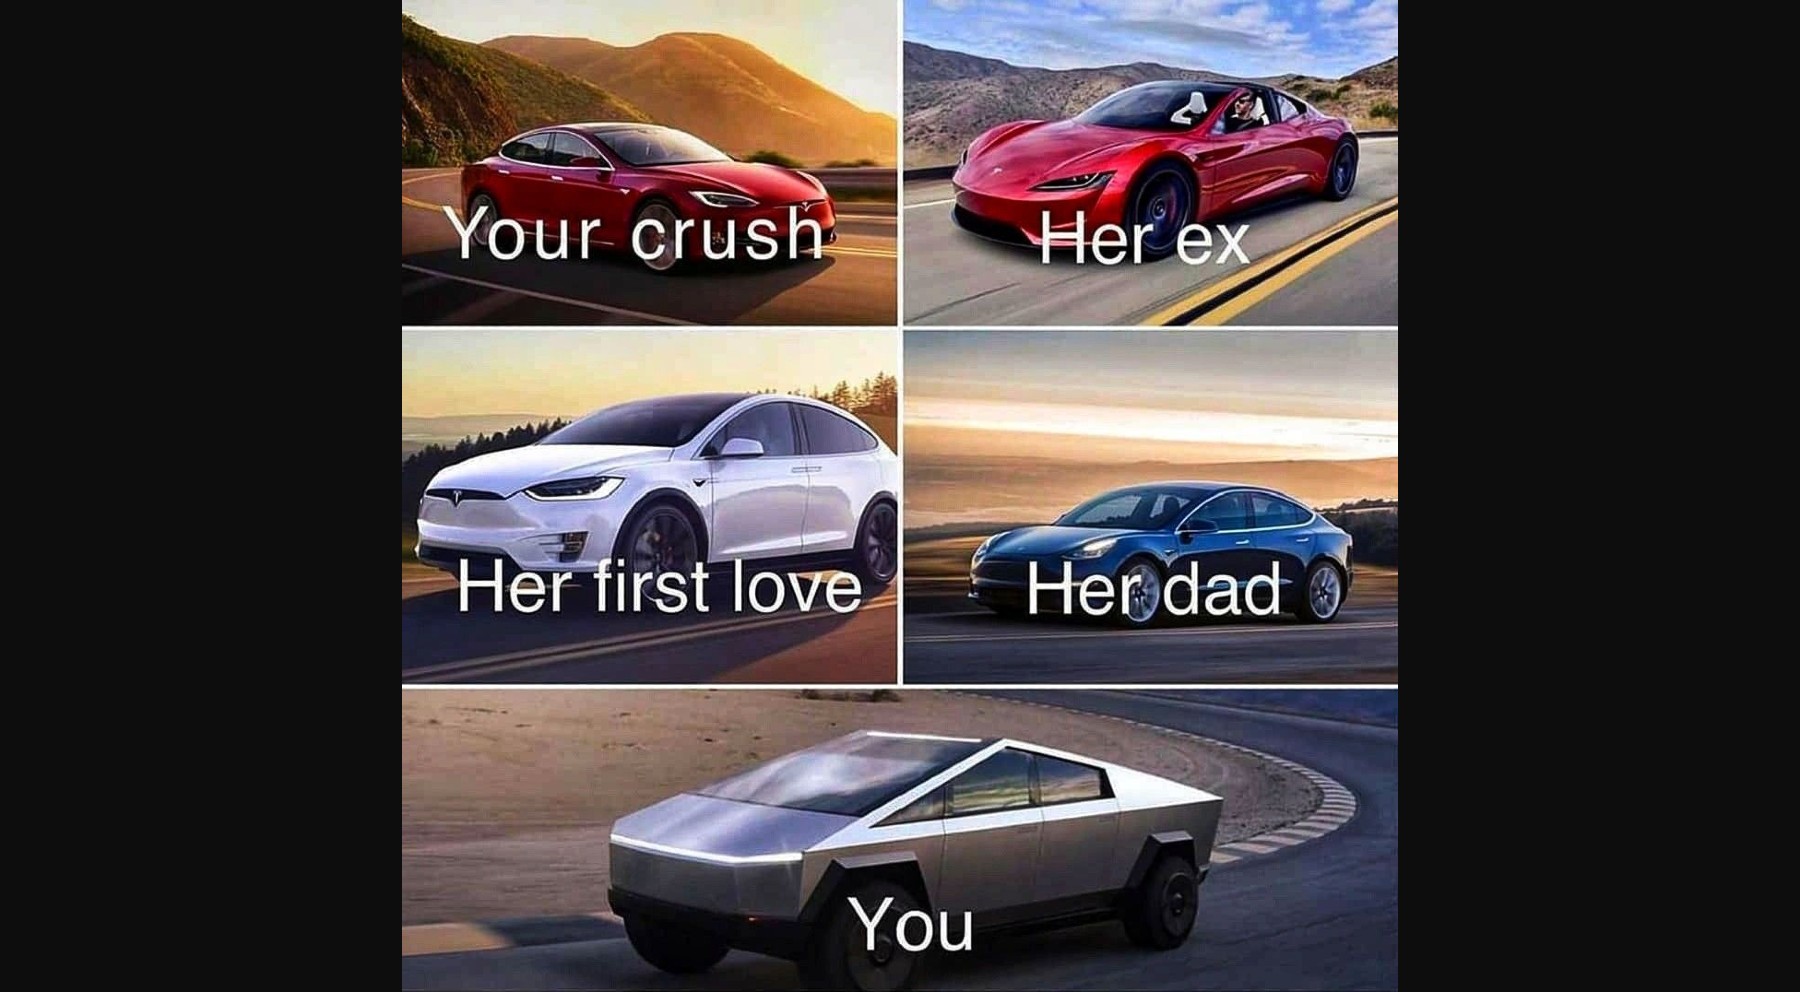 Memes coches eléctricos